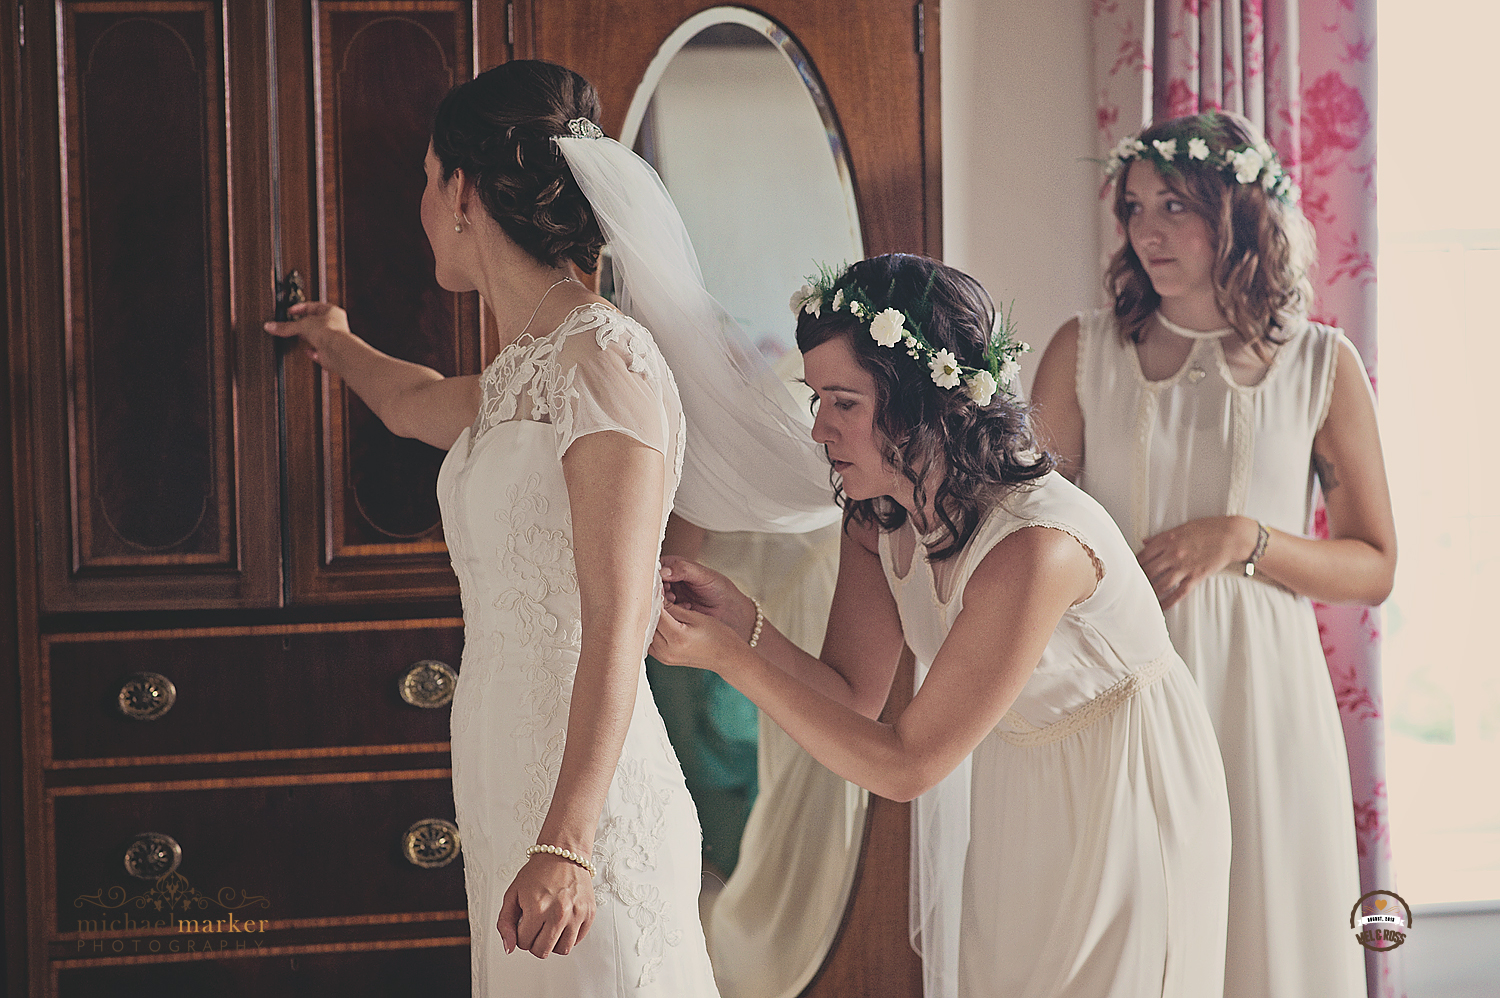 Bridesmaid buttoning the wedding dress